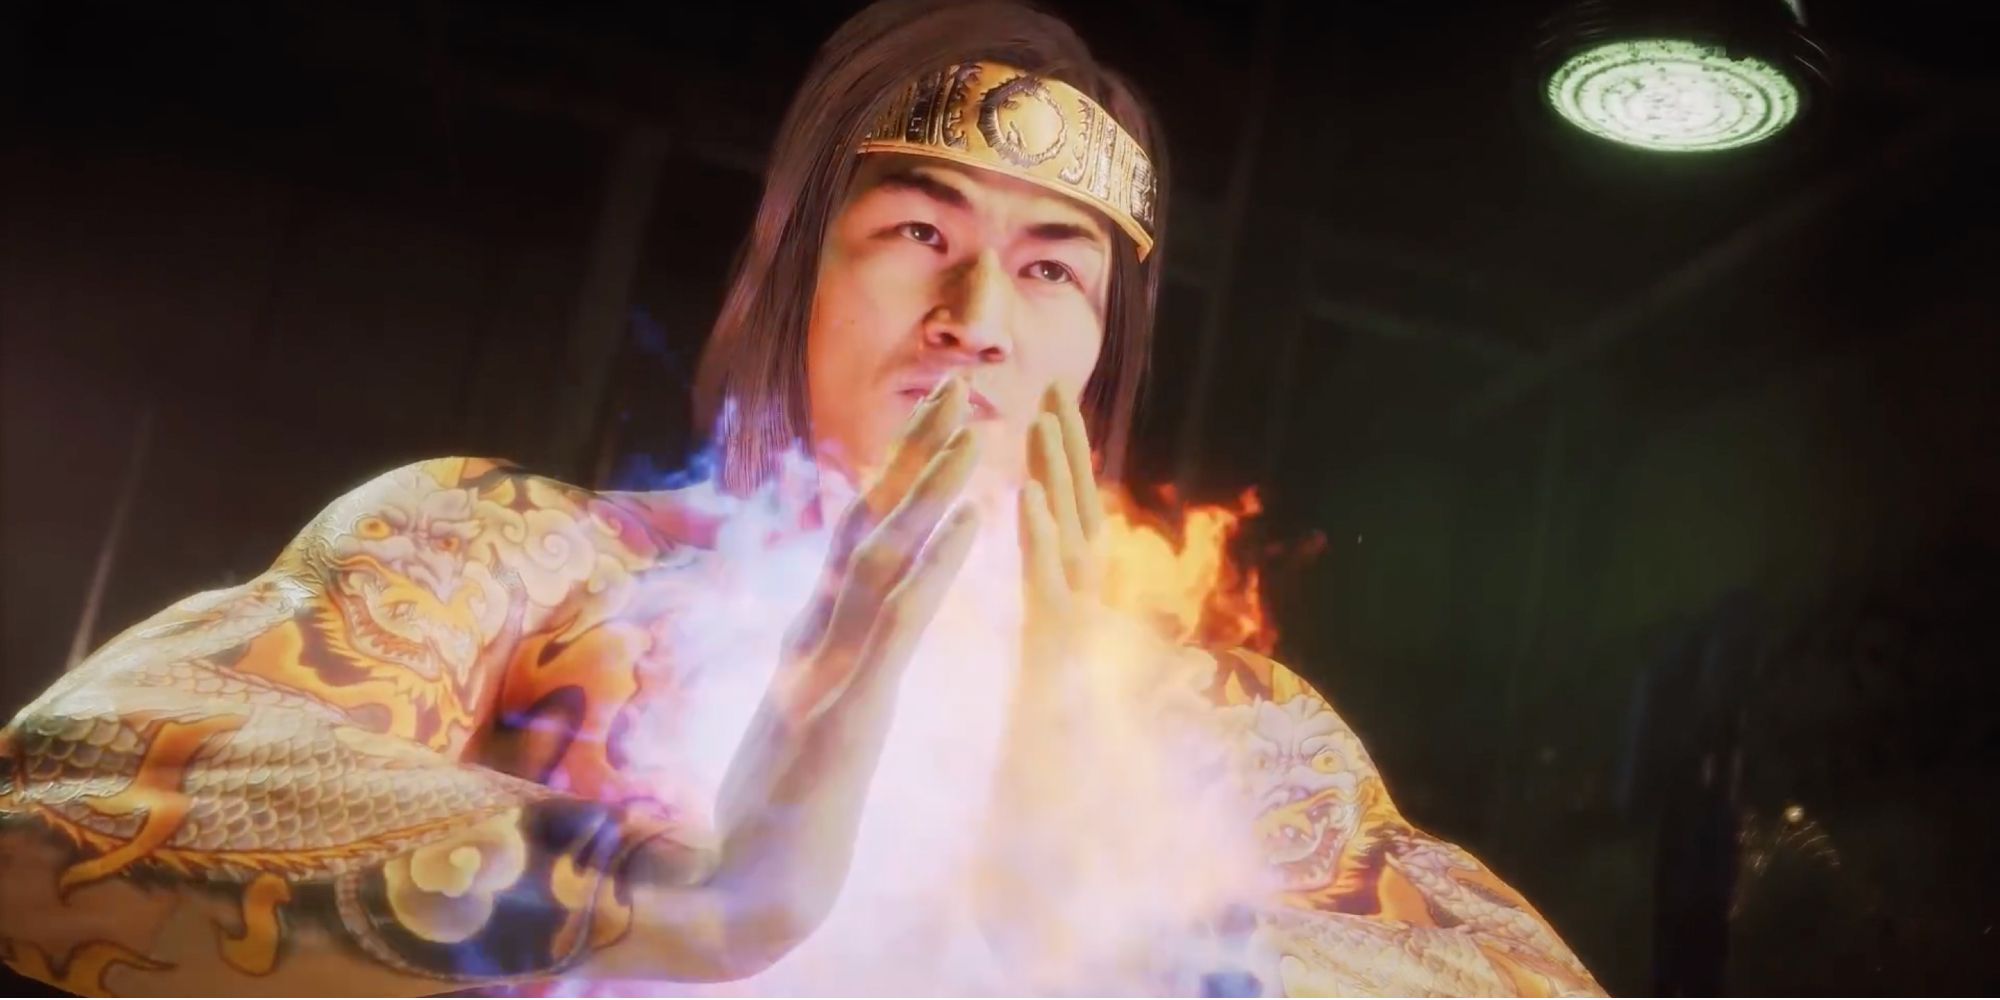 Mortal Kombat 11 - Liu Kang - Player prepares fighting stance to destroy enemies in battle